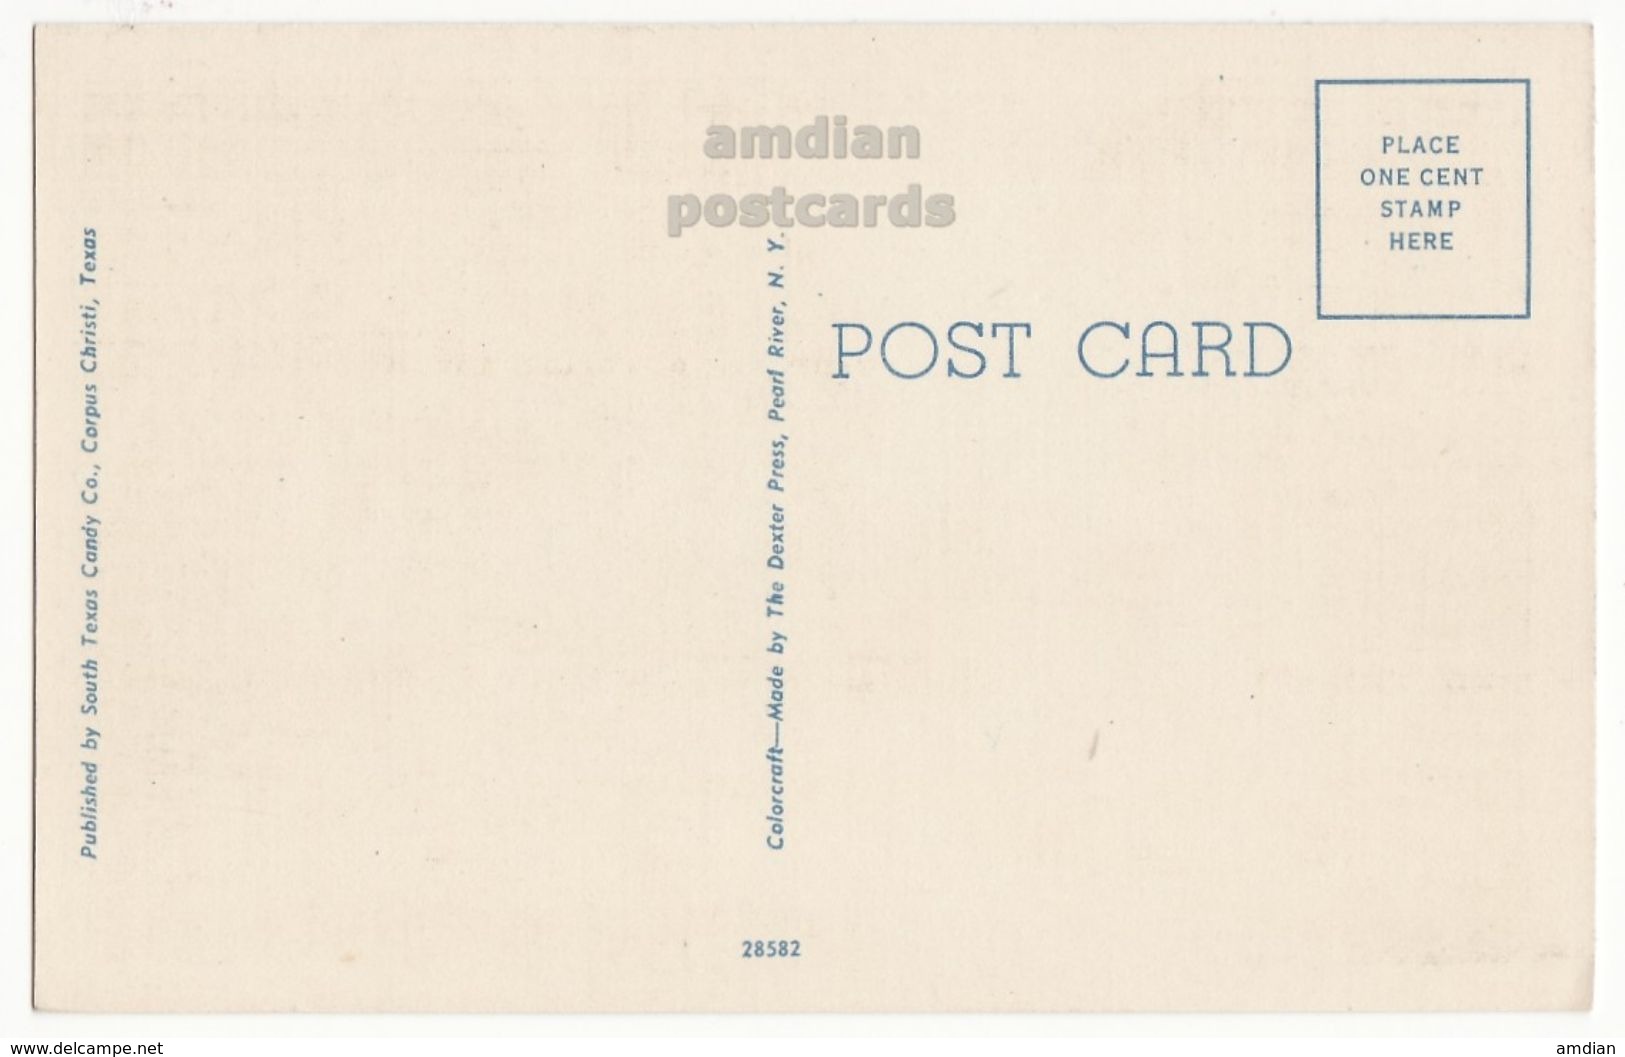 Corpus Christi TX, Artesian Park - C1940s Vintage Linen Texas Postcard M8522 - Corpus Christi